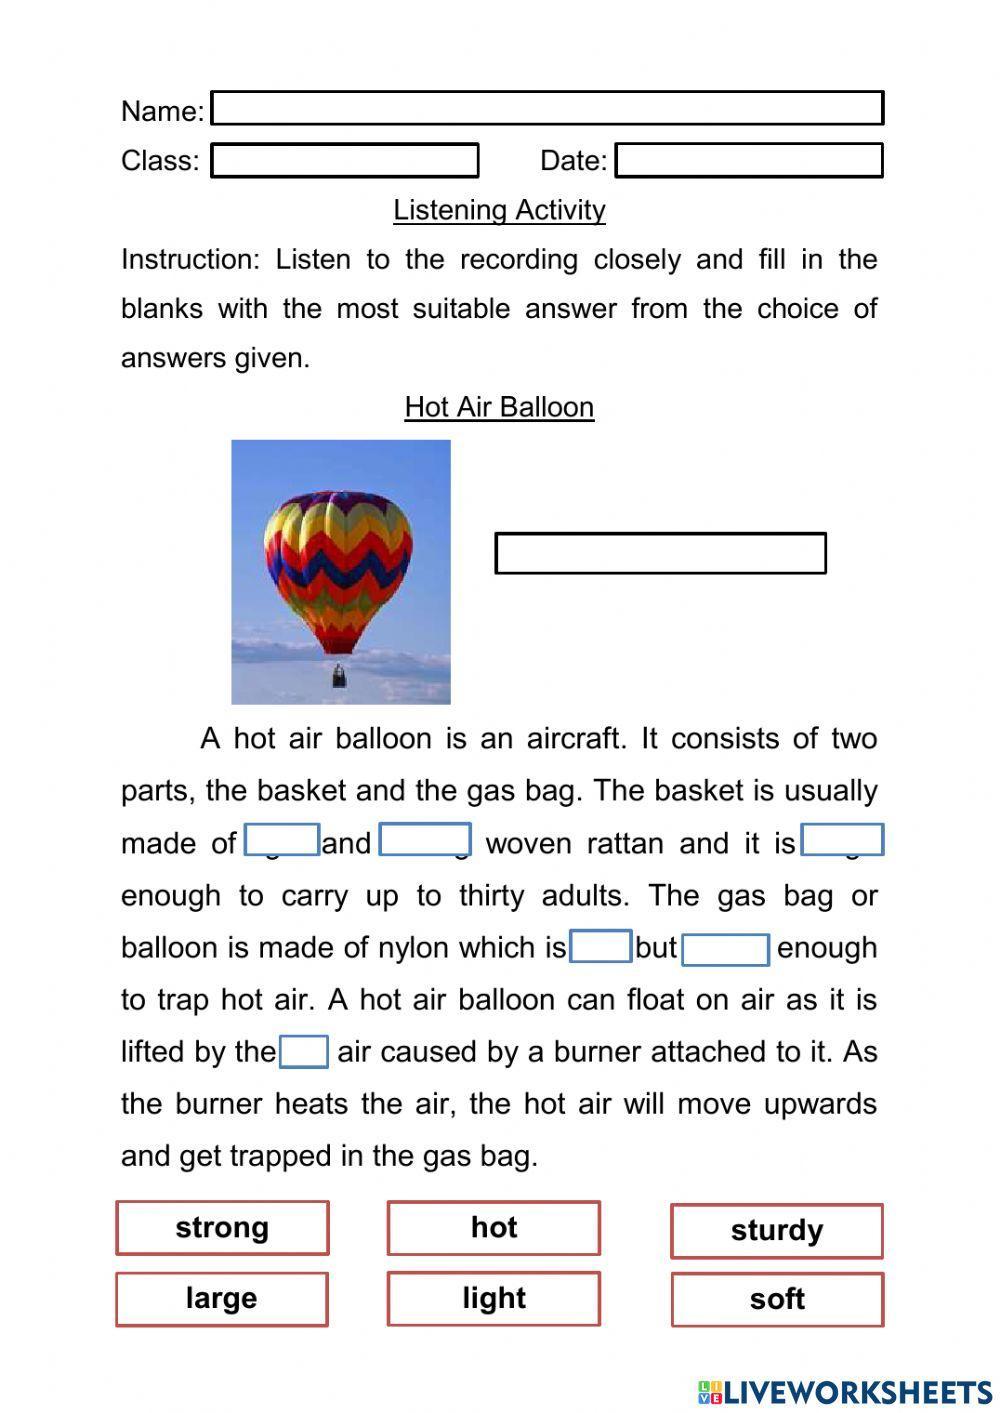 Listening Activity - Hot Air Balloon